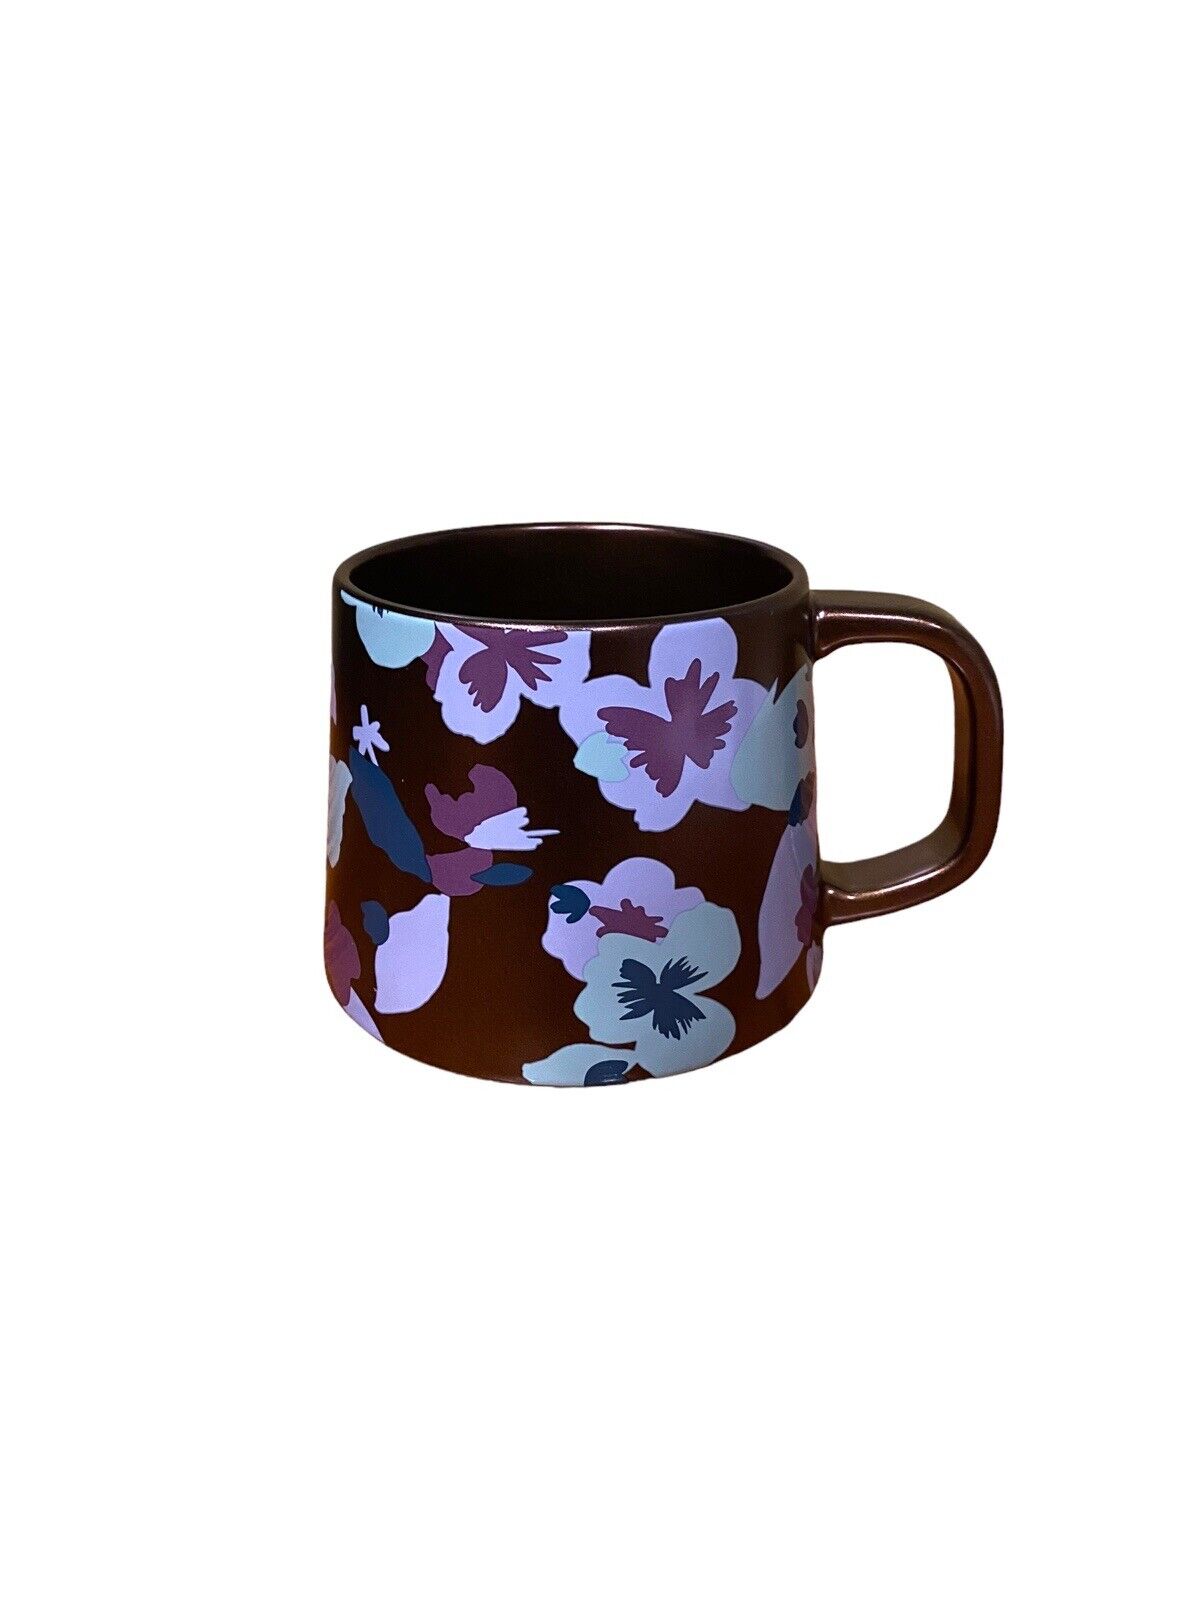 Starbucks Floral Pansies Spring Valentines Coffee Ceramic Travel Mug 14oz. 2021 